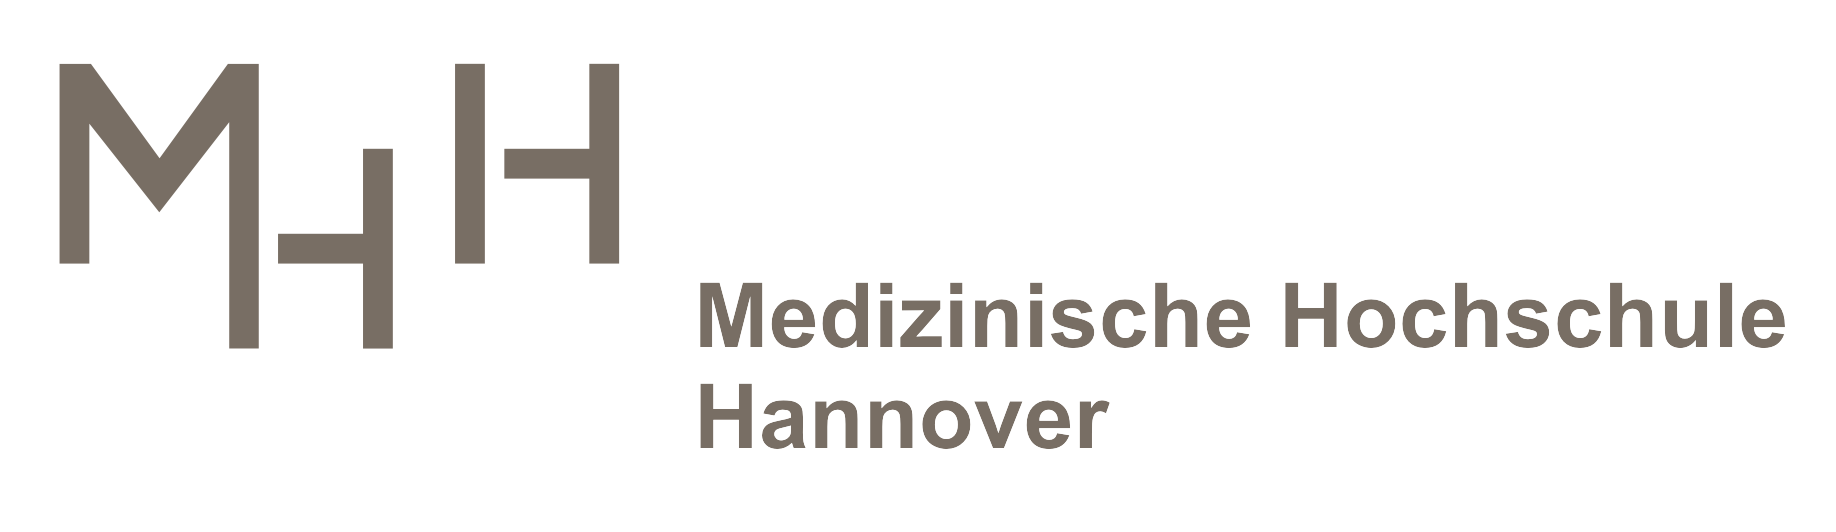 Hannover Medical School (MHH)  